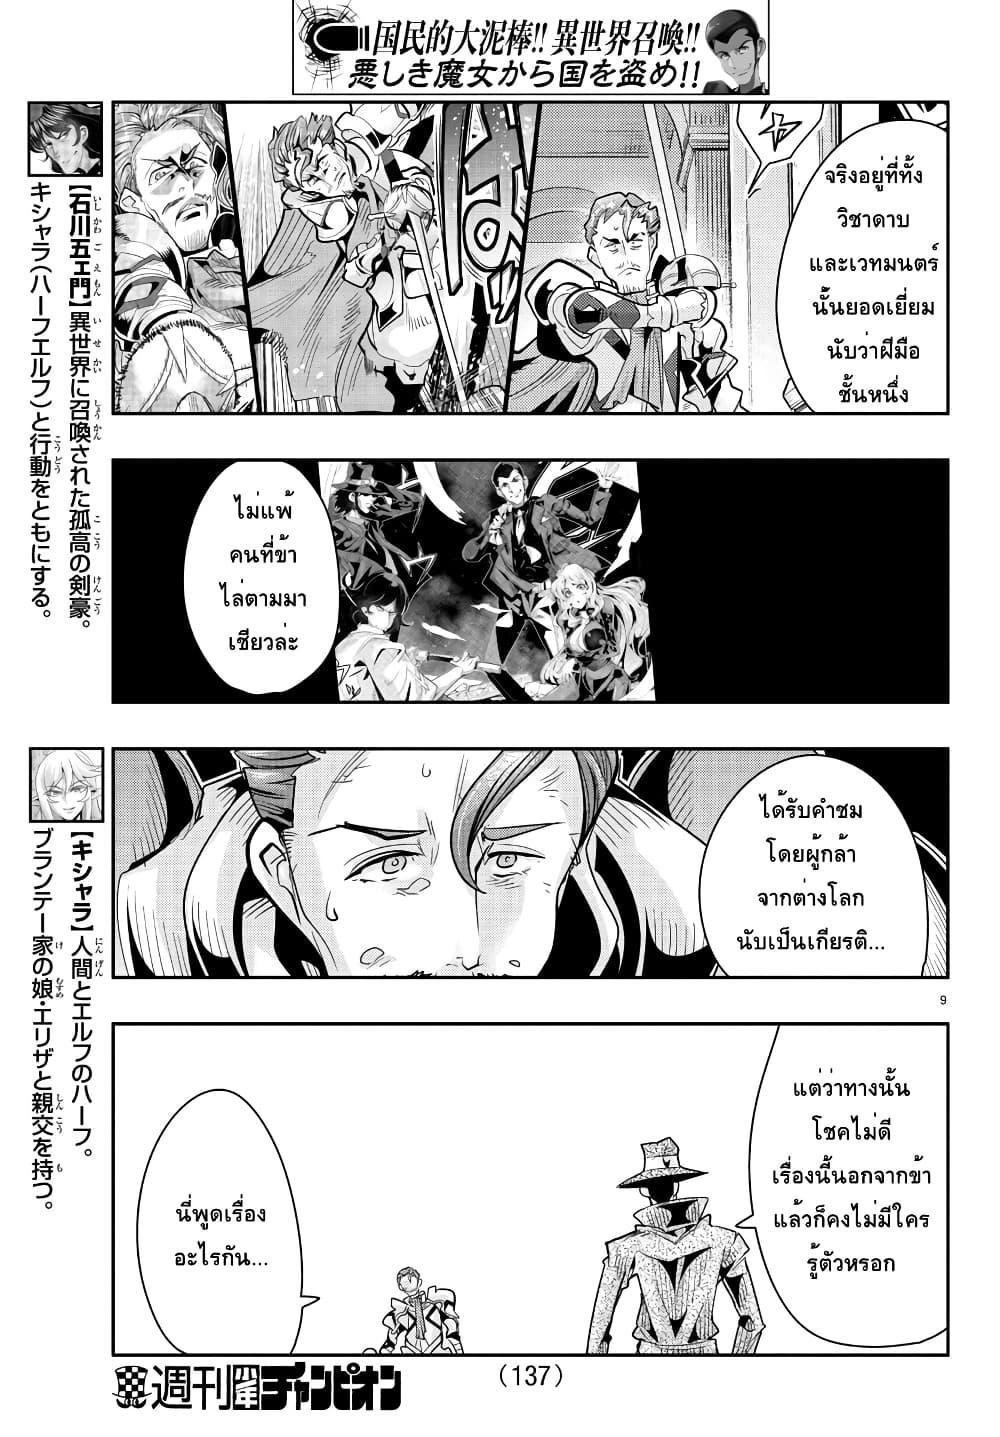 Lupin Sansei Isekai no Himegimi 36-ความรู้สึกที่คุ้นเคย